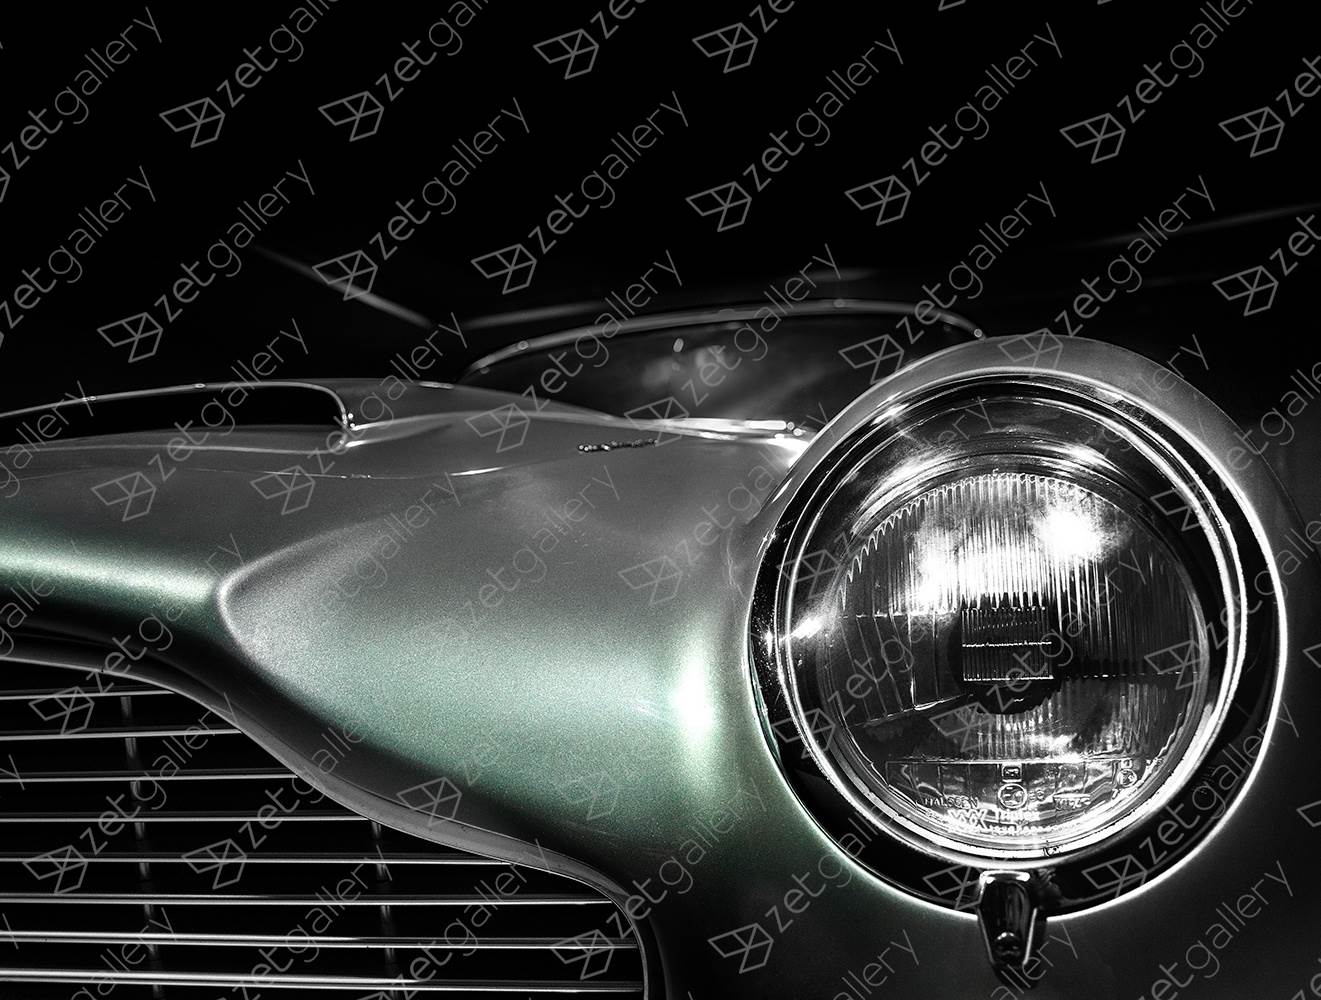 Aston Martin DB6 01, Fotografia Digital Vanguarda original por Yggdrasil Art